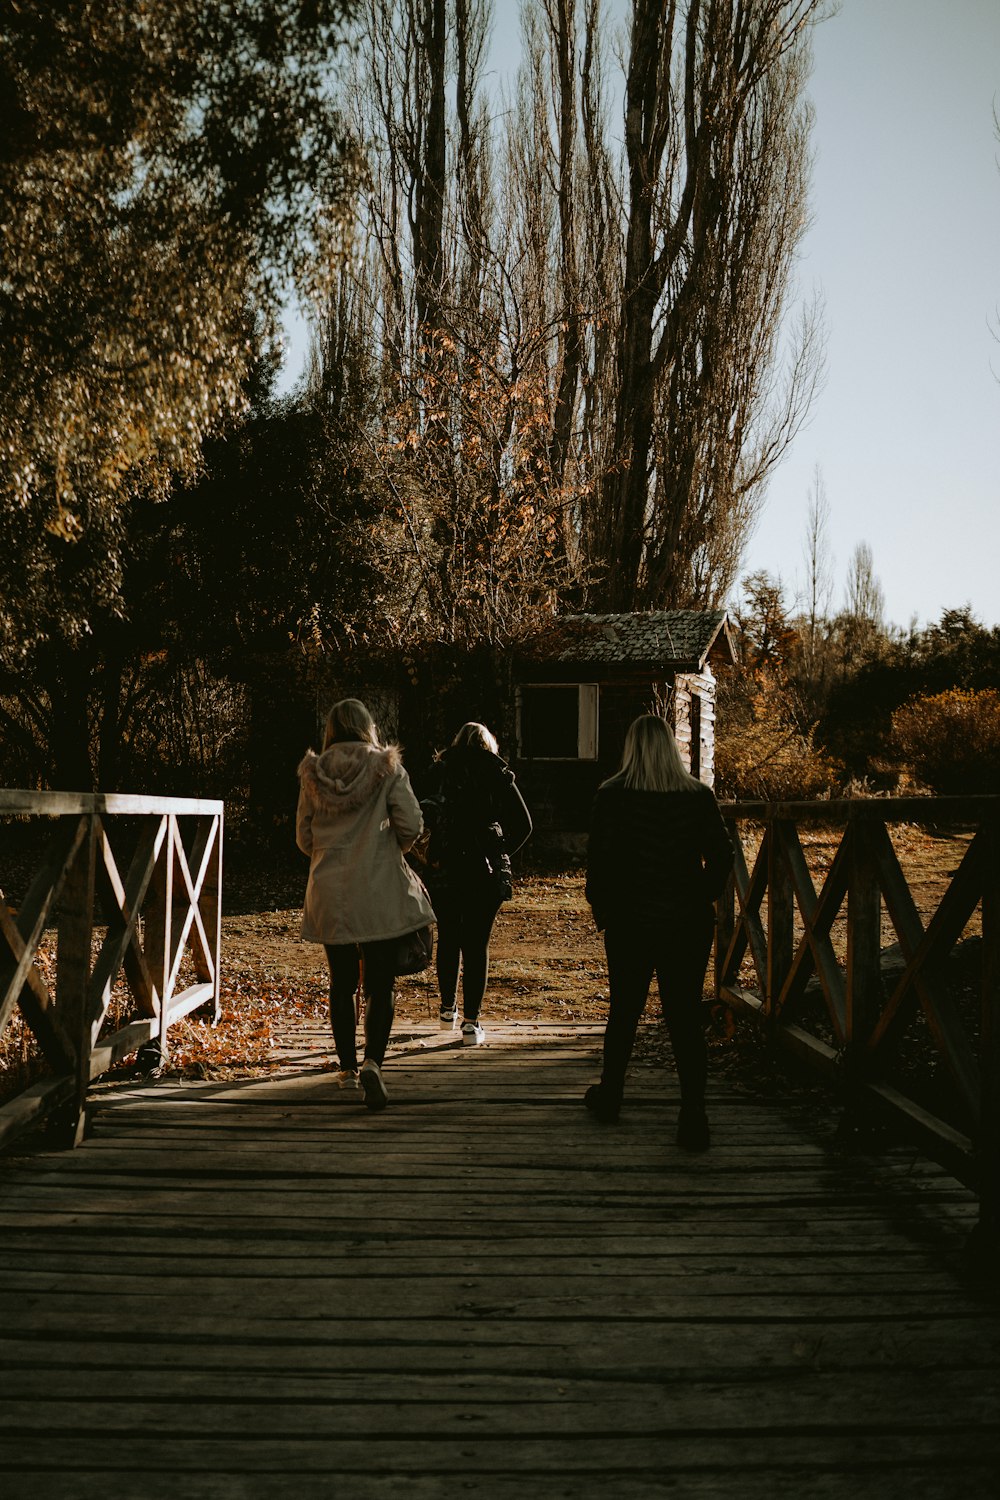 a group of people walking across a wooden bridge